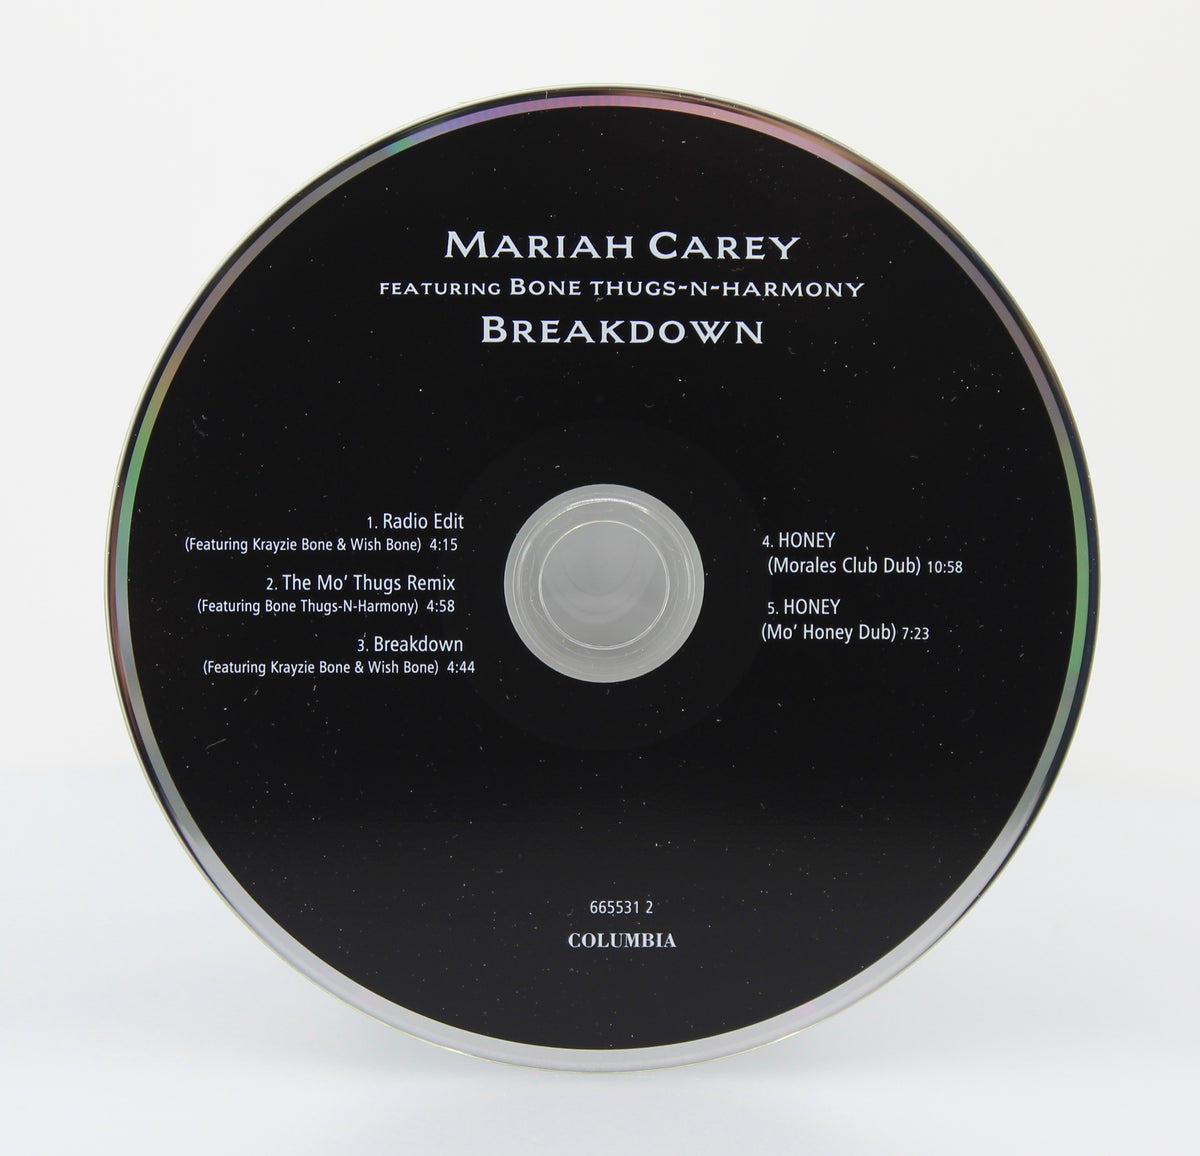 Mariah Carey Featuring Bone Thugs-N-Harmony – Breakdown, CD Maxi, Australia 1997